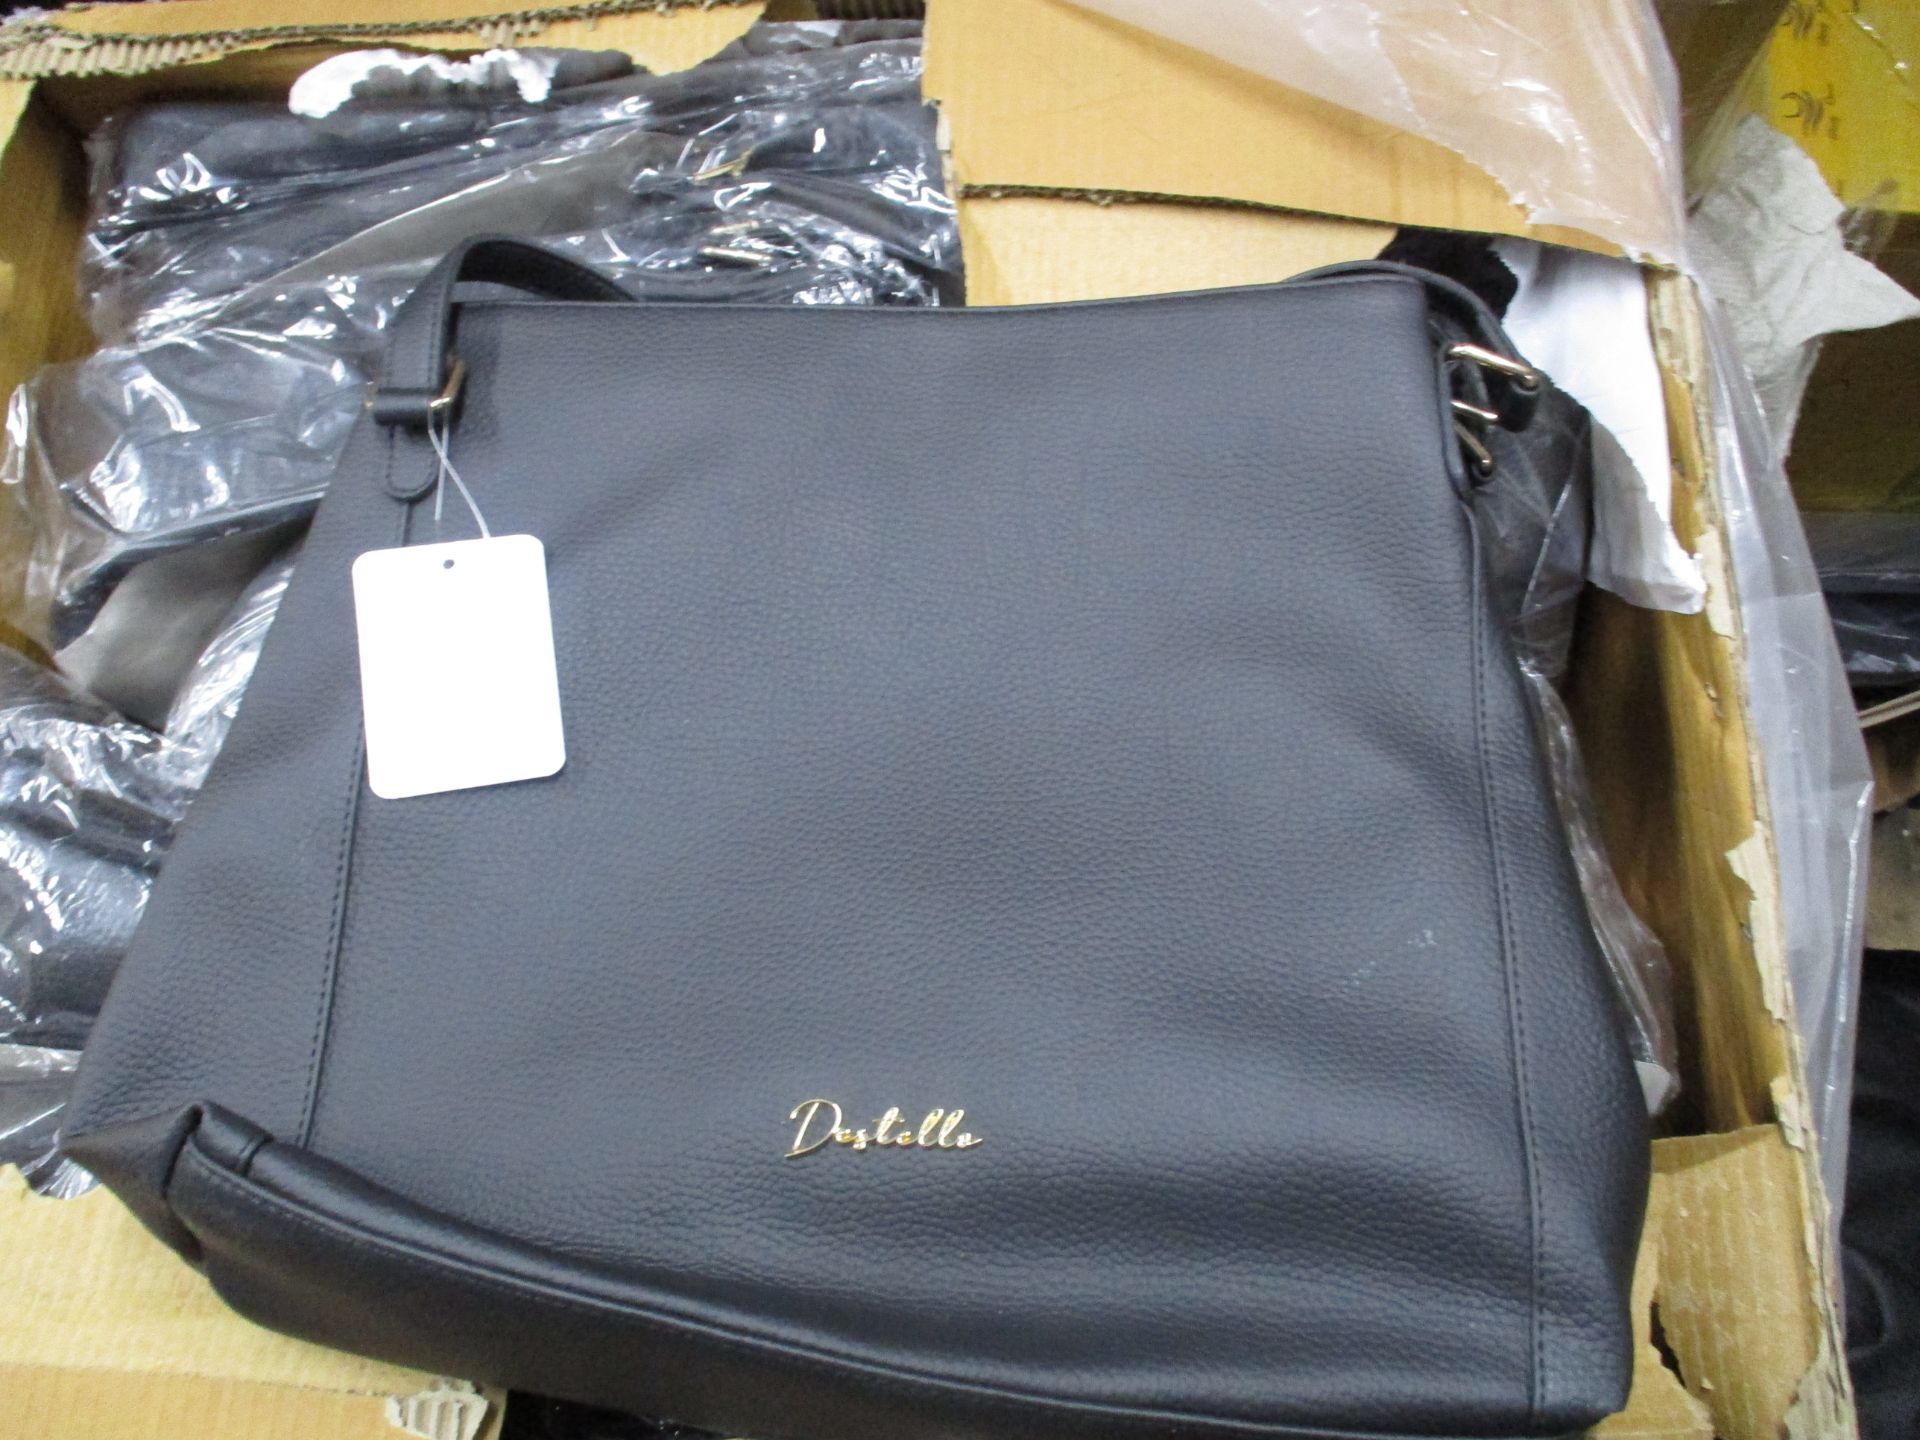 21 New Black Destello Handbags